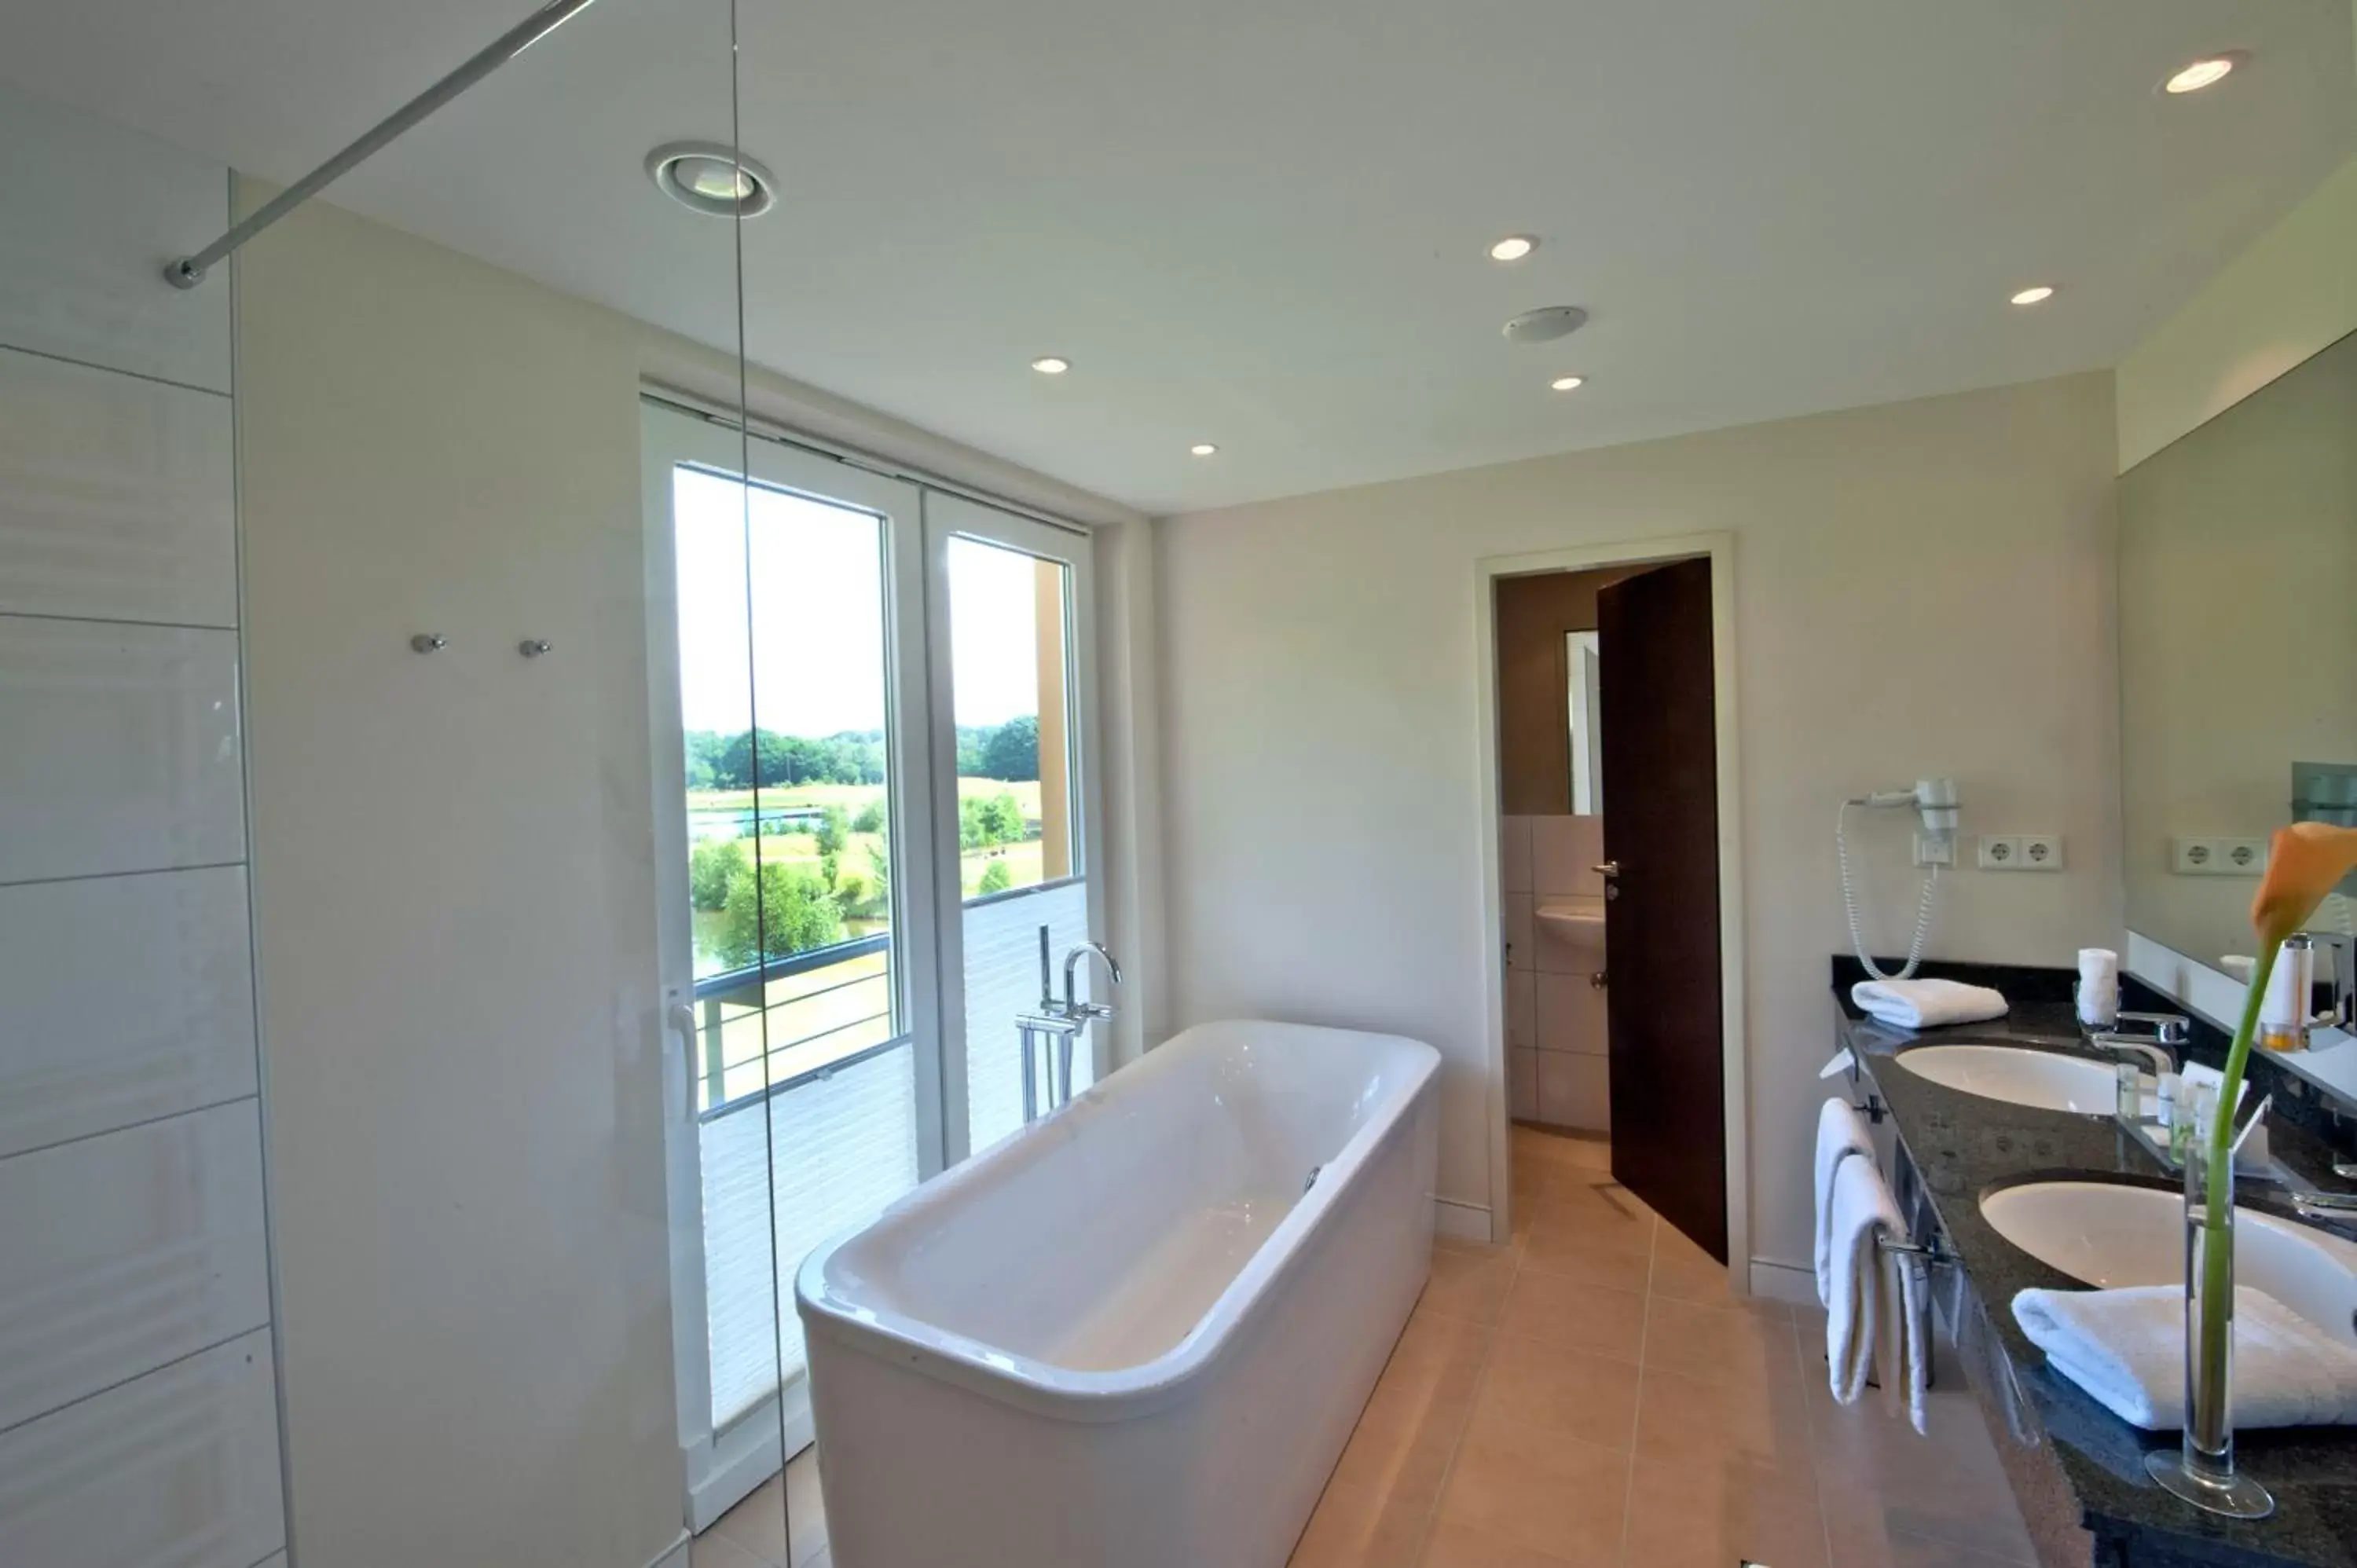 Bathroom in Best Western Premier Castanea Resort Hotel